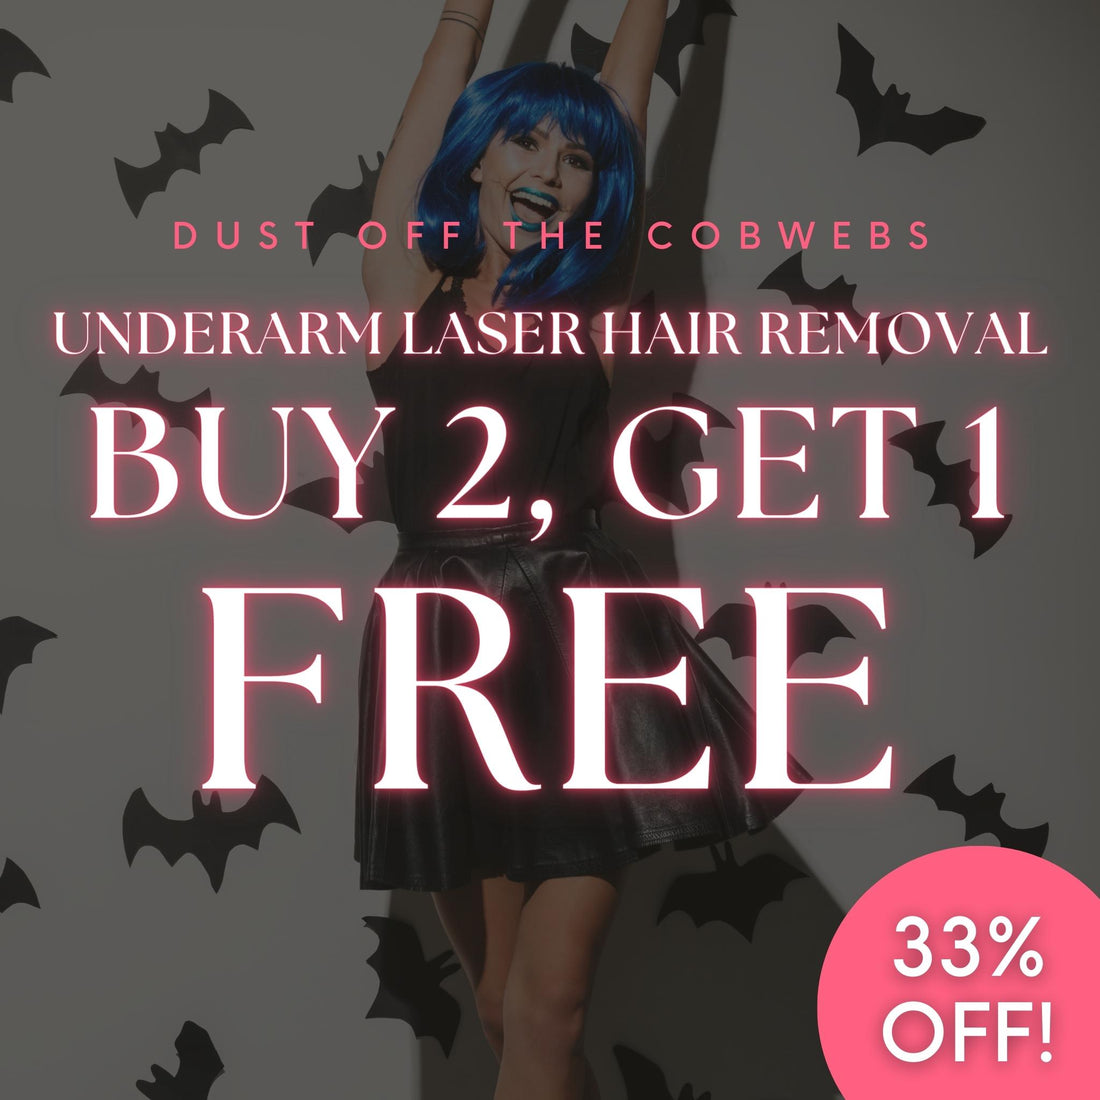 Buy 2, Get 1 FREE Underarm Laser Hair Removal